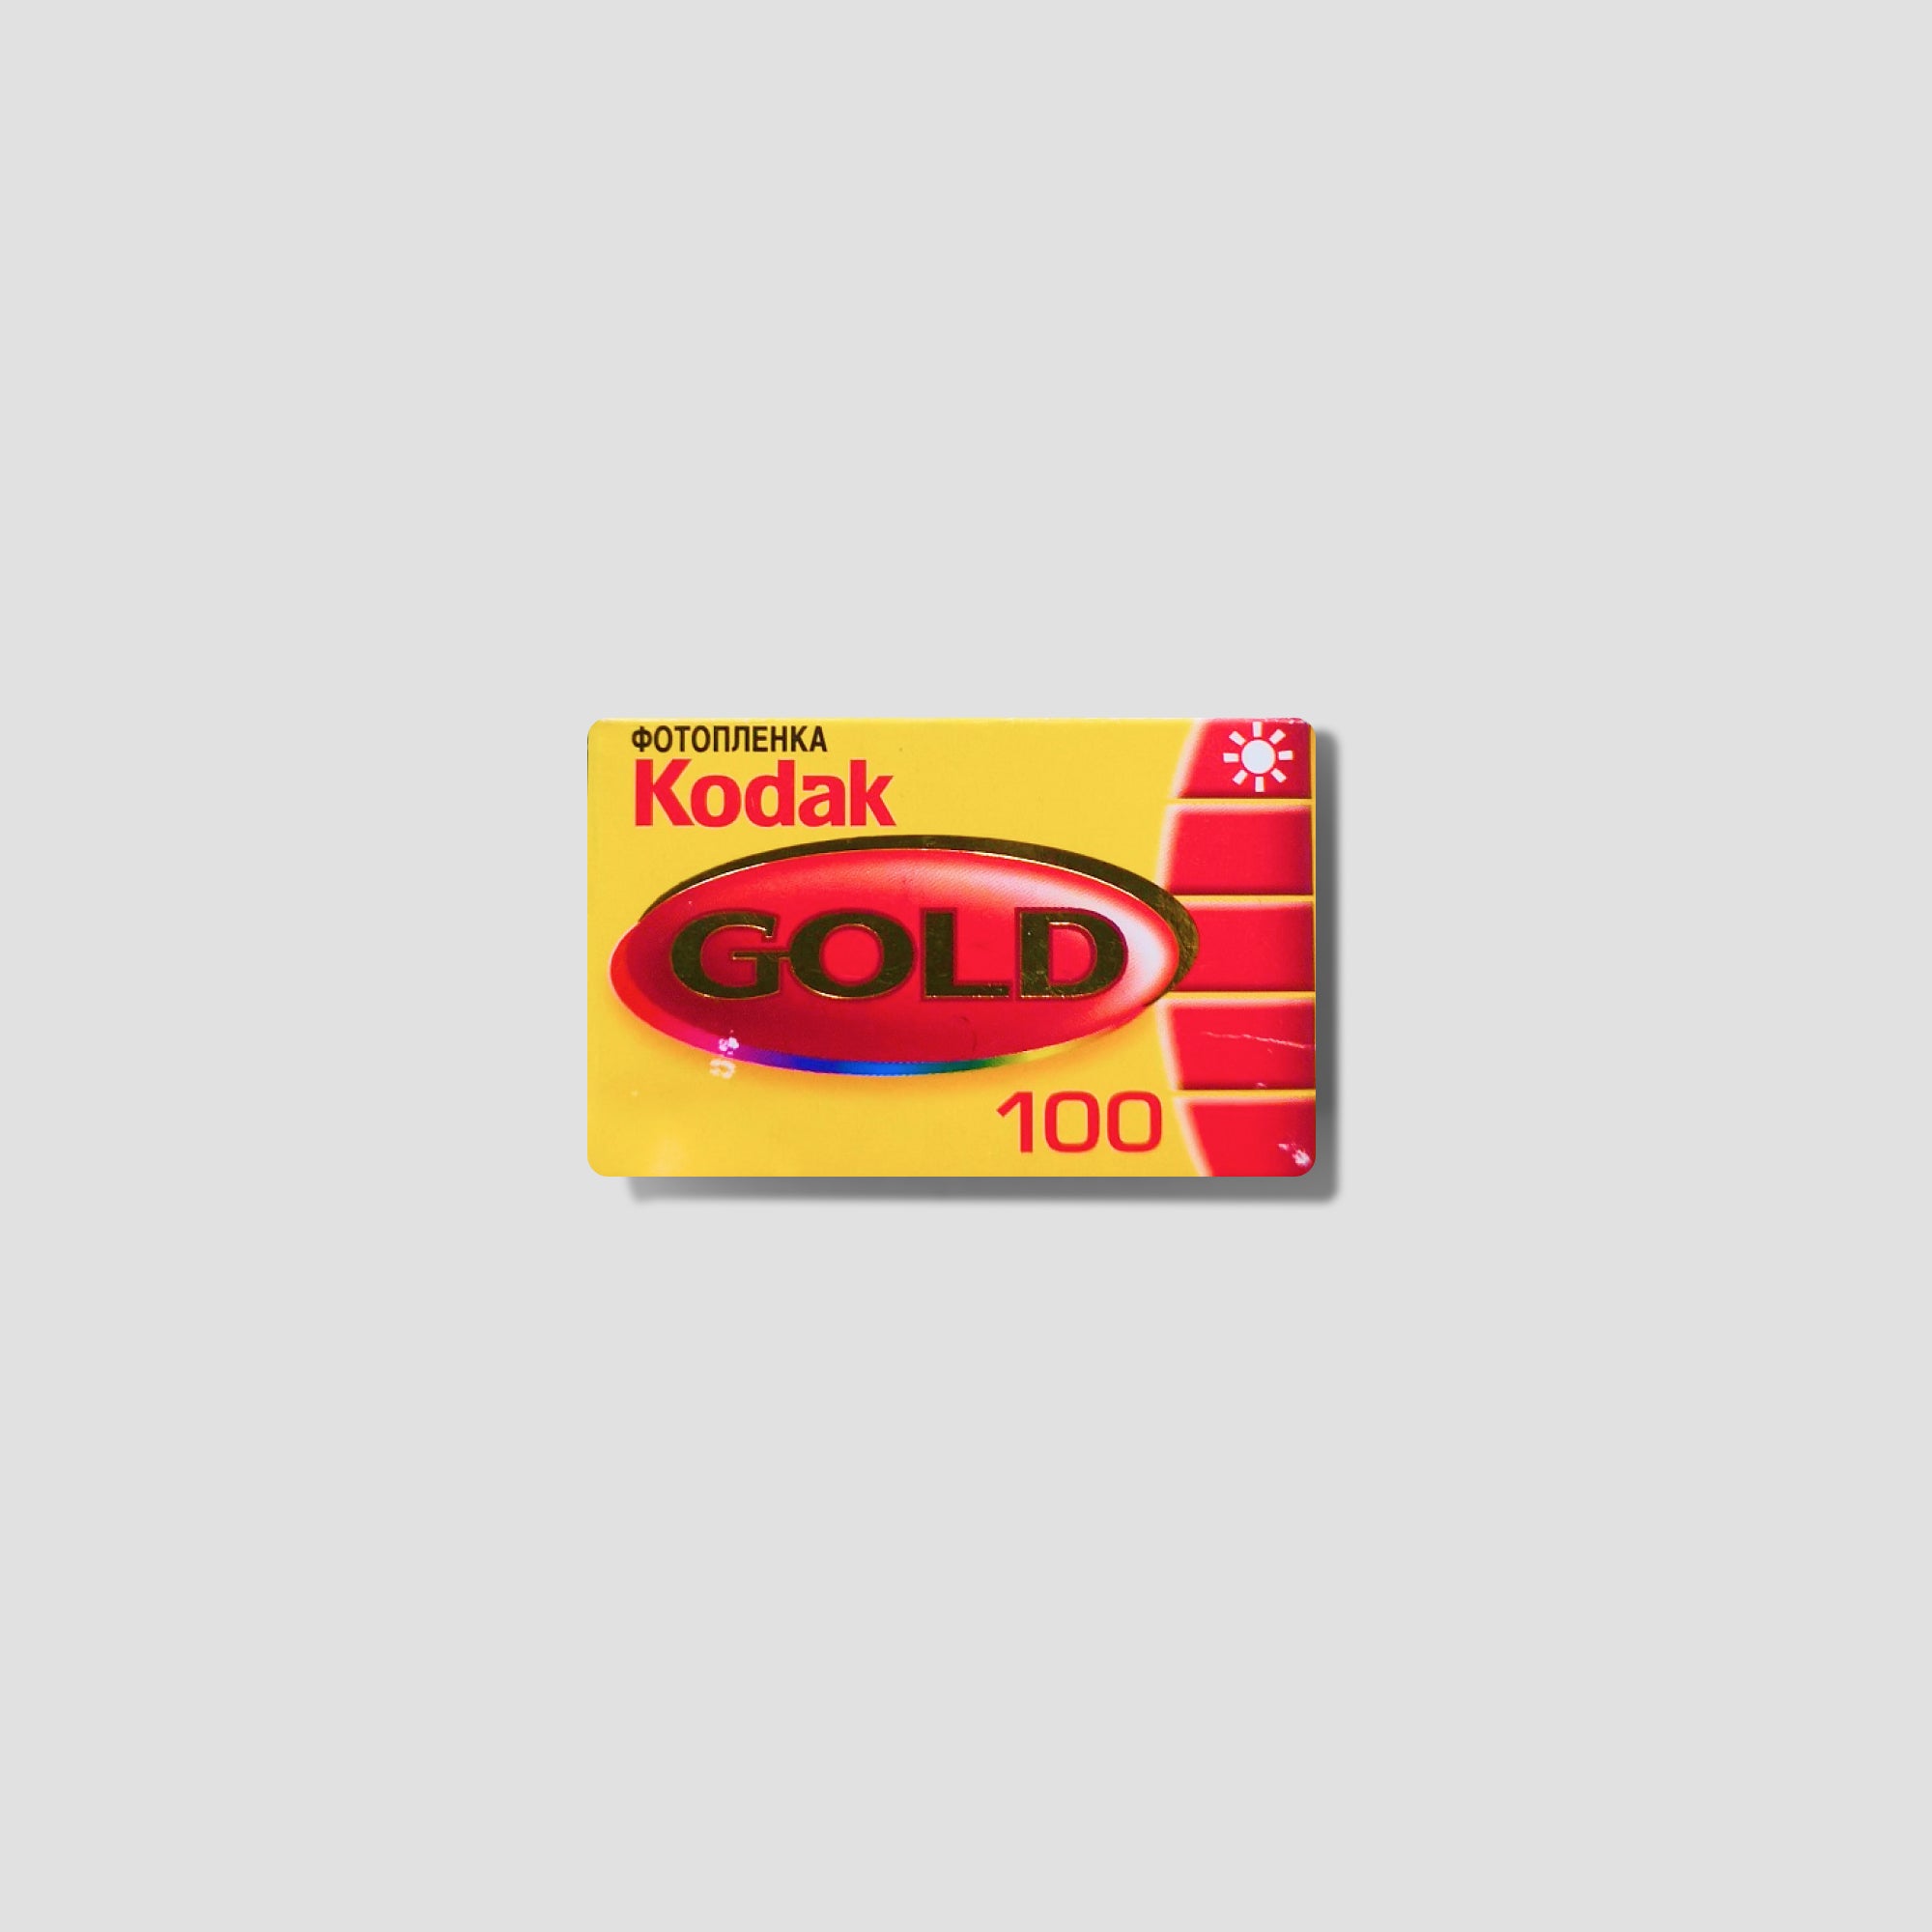 Buy Kodak Gold 100 now at Analogue Amsterdam